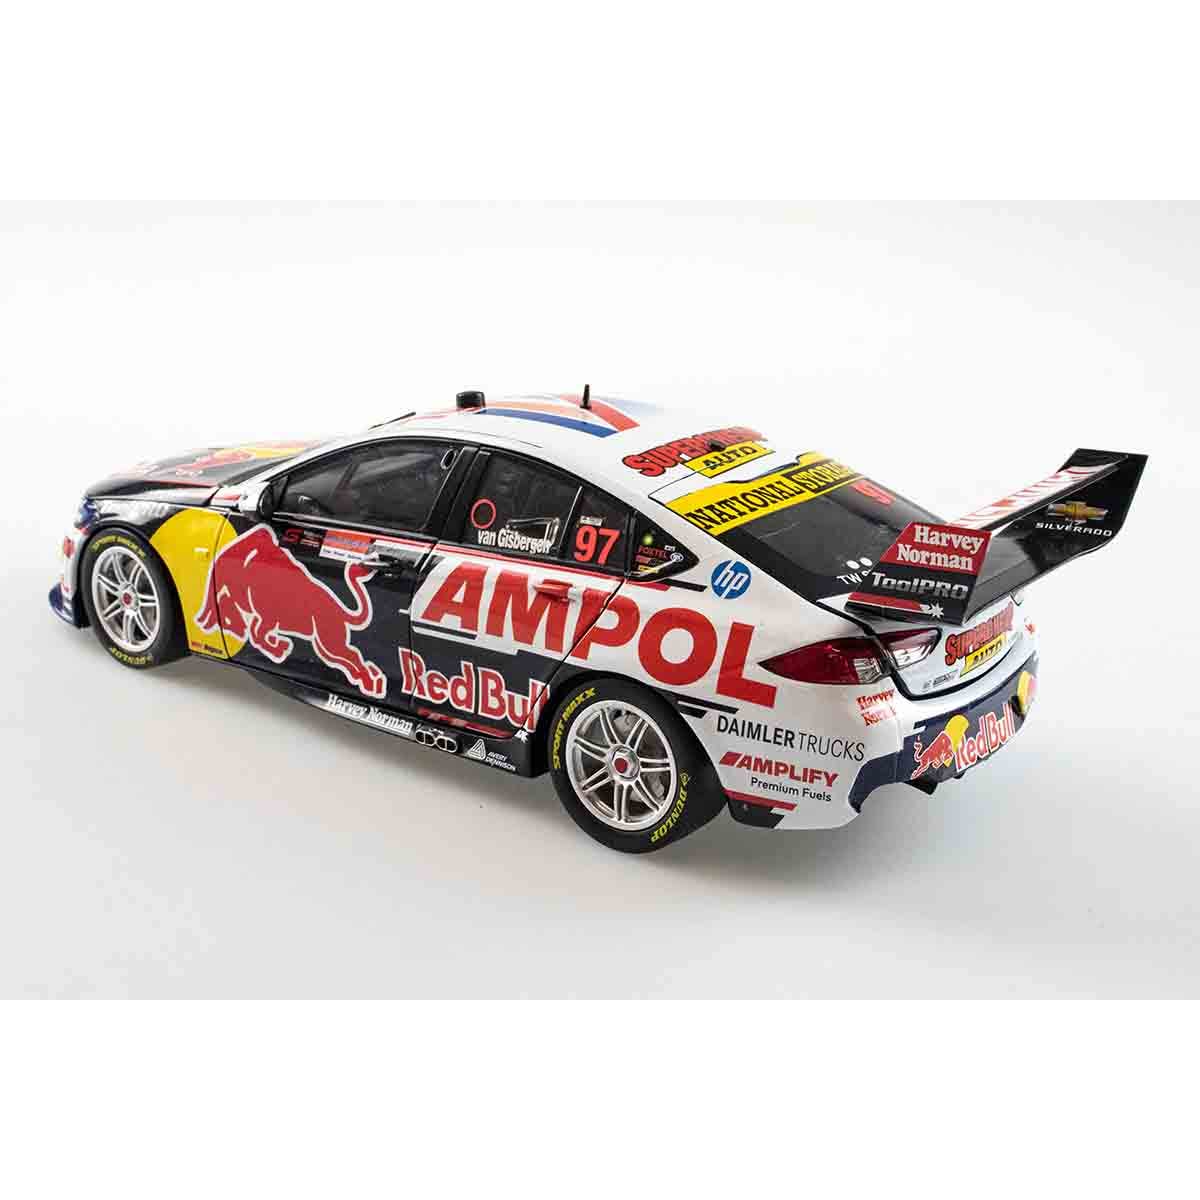 HOLDEN ZB COMMODORE - RED BULL AMPOL RACING #97 - SHANE VAN GISBERGEN - 2021 CHAMPIONSHIP WINNER - 1:18 Scale Diecast Model Car